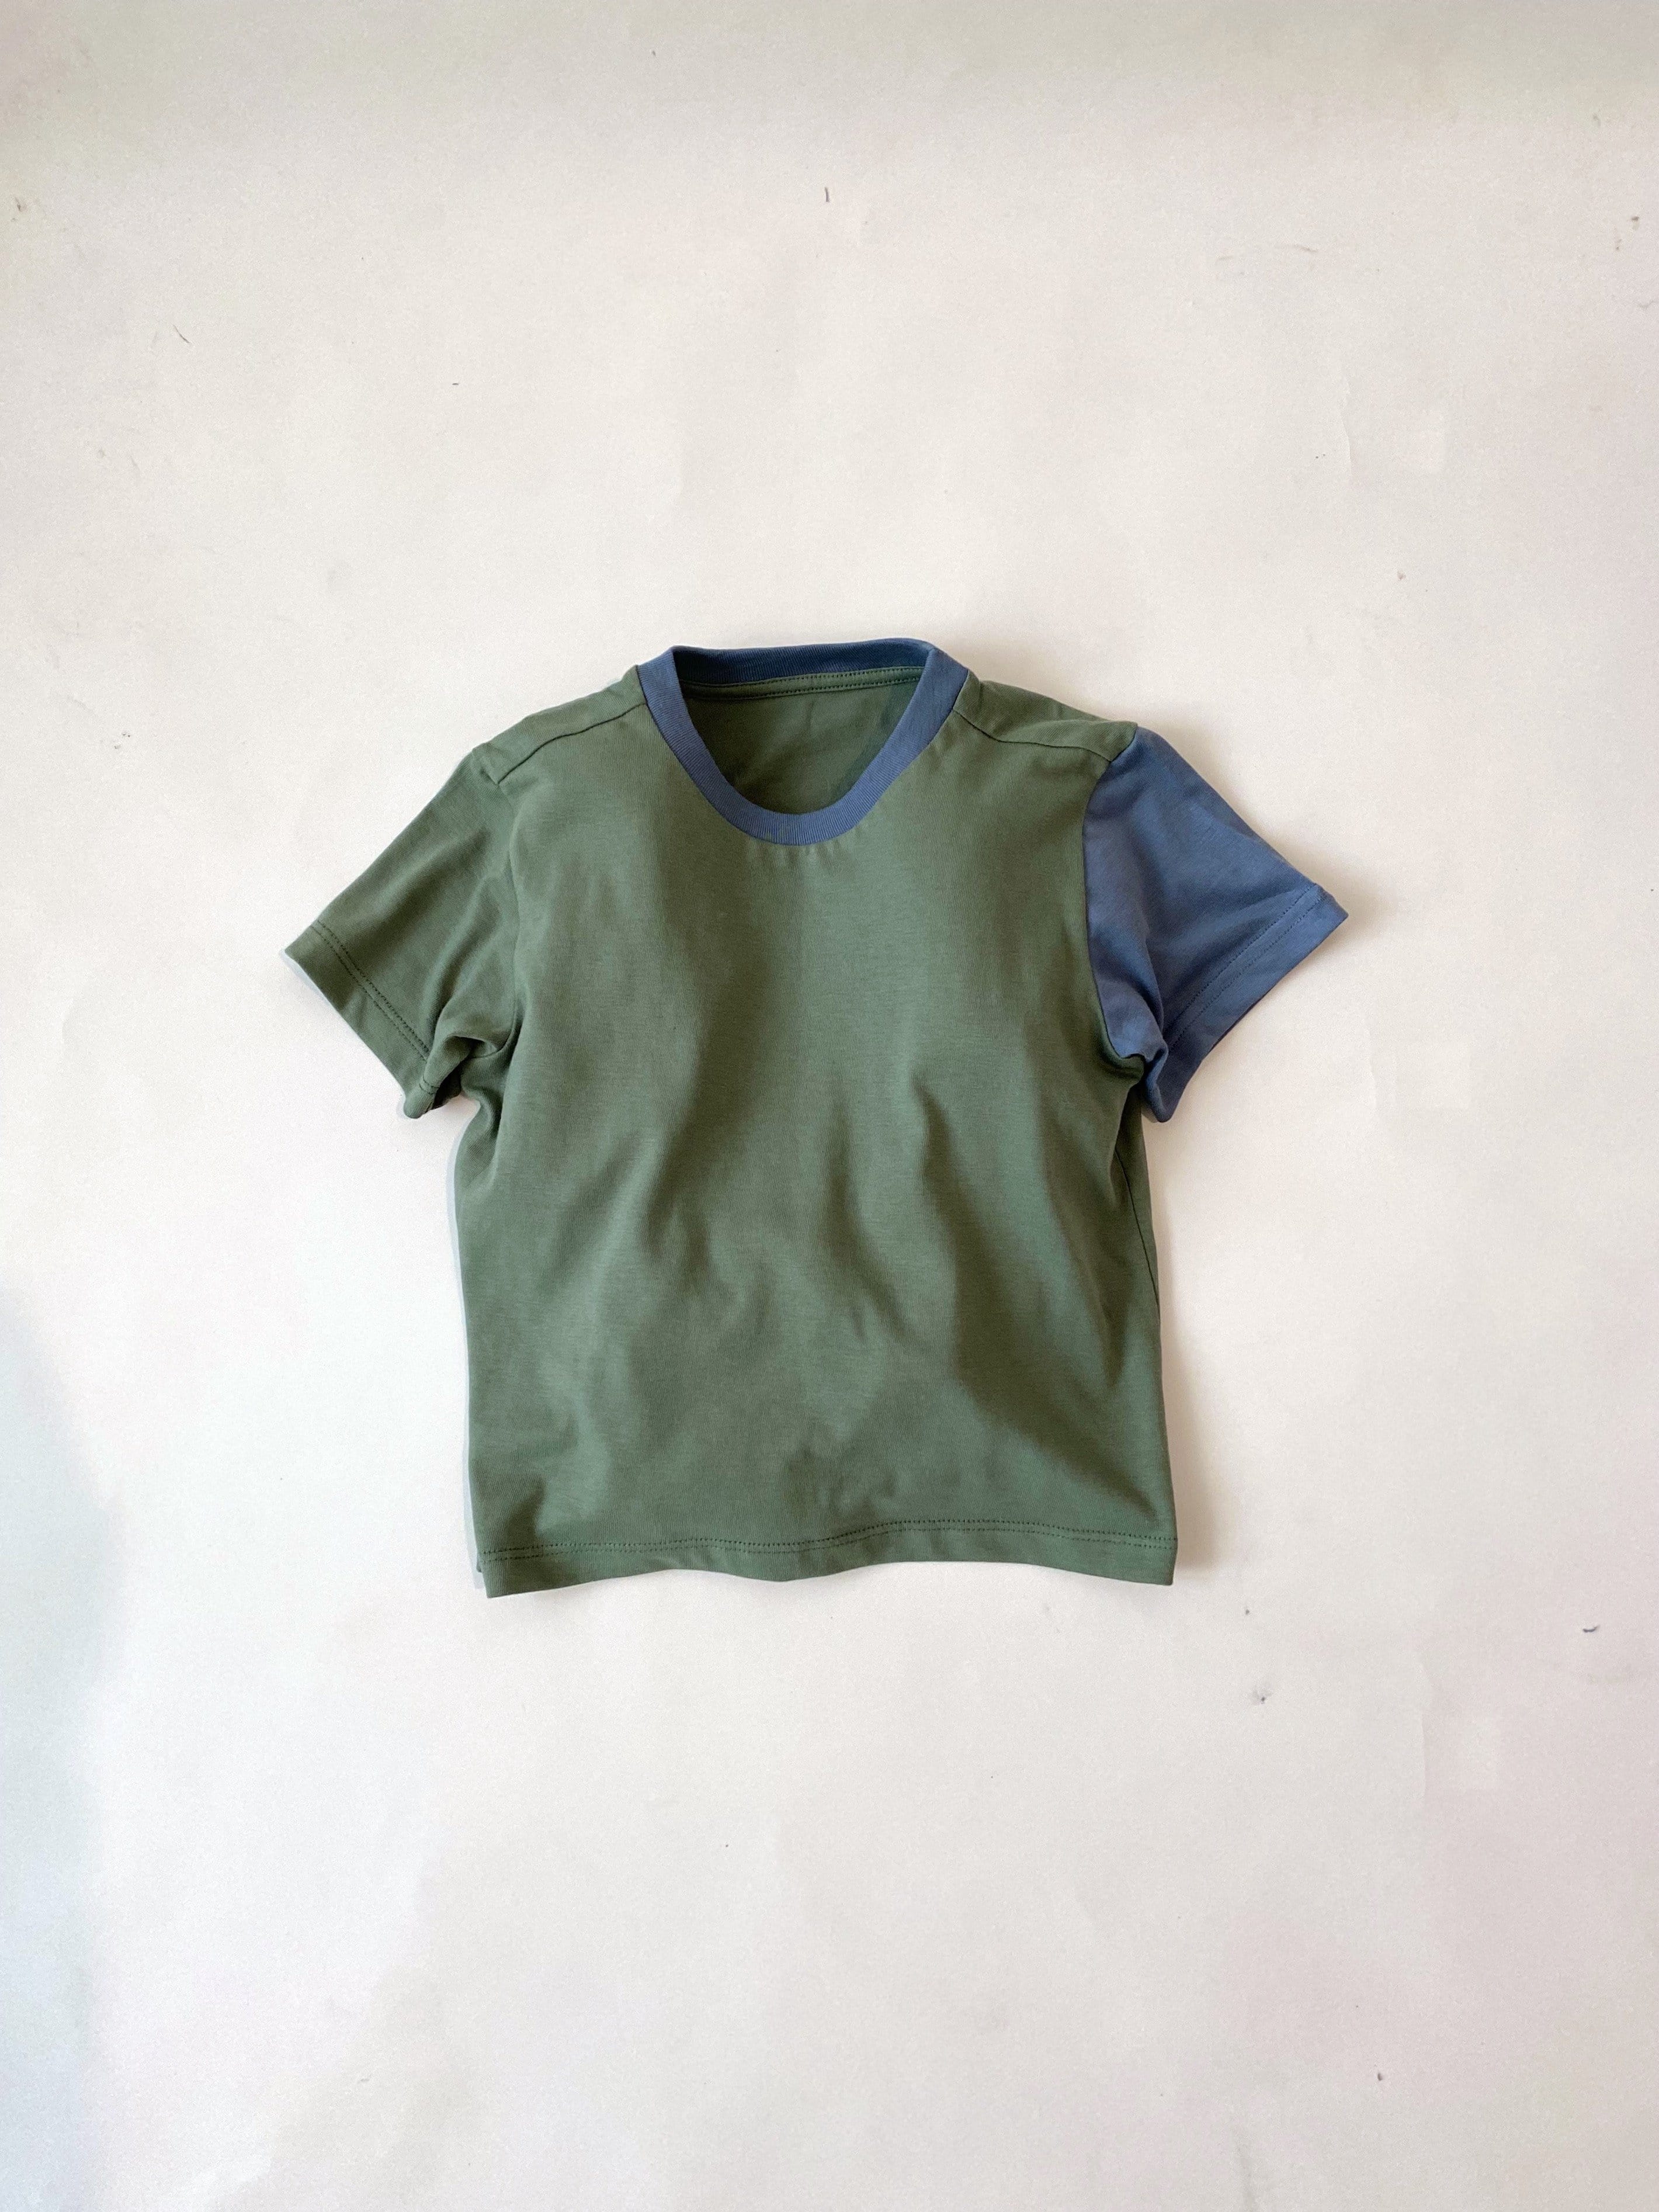 Saltpetre organic, casual unisex kids wear for boys and girls. Organic aqua blue & green colour blocked sleeve cotton t-shirt. Pastel-shade theme